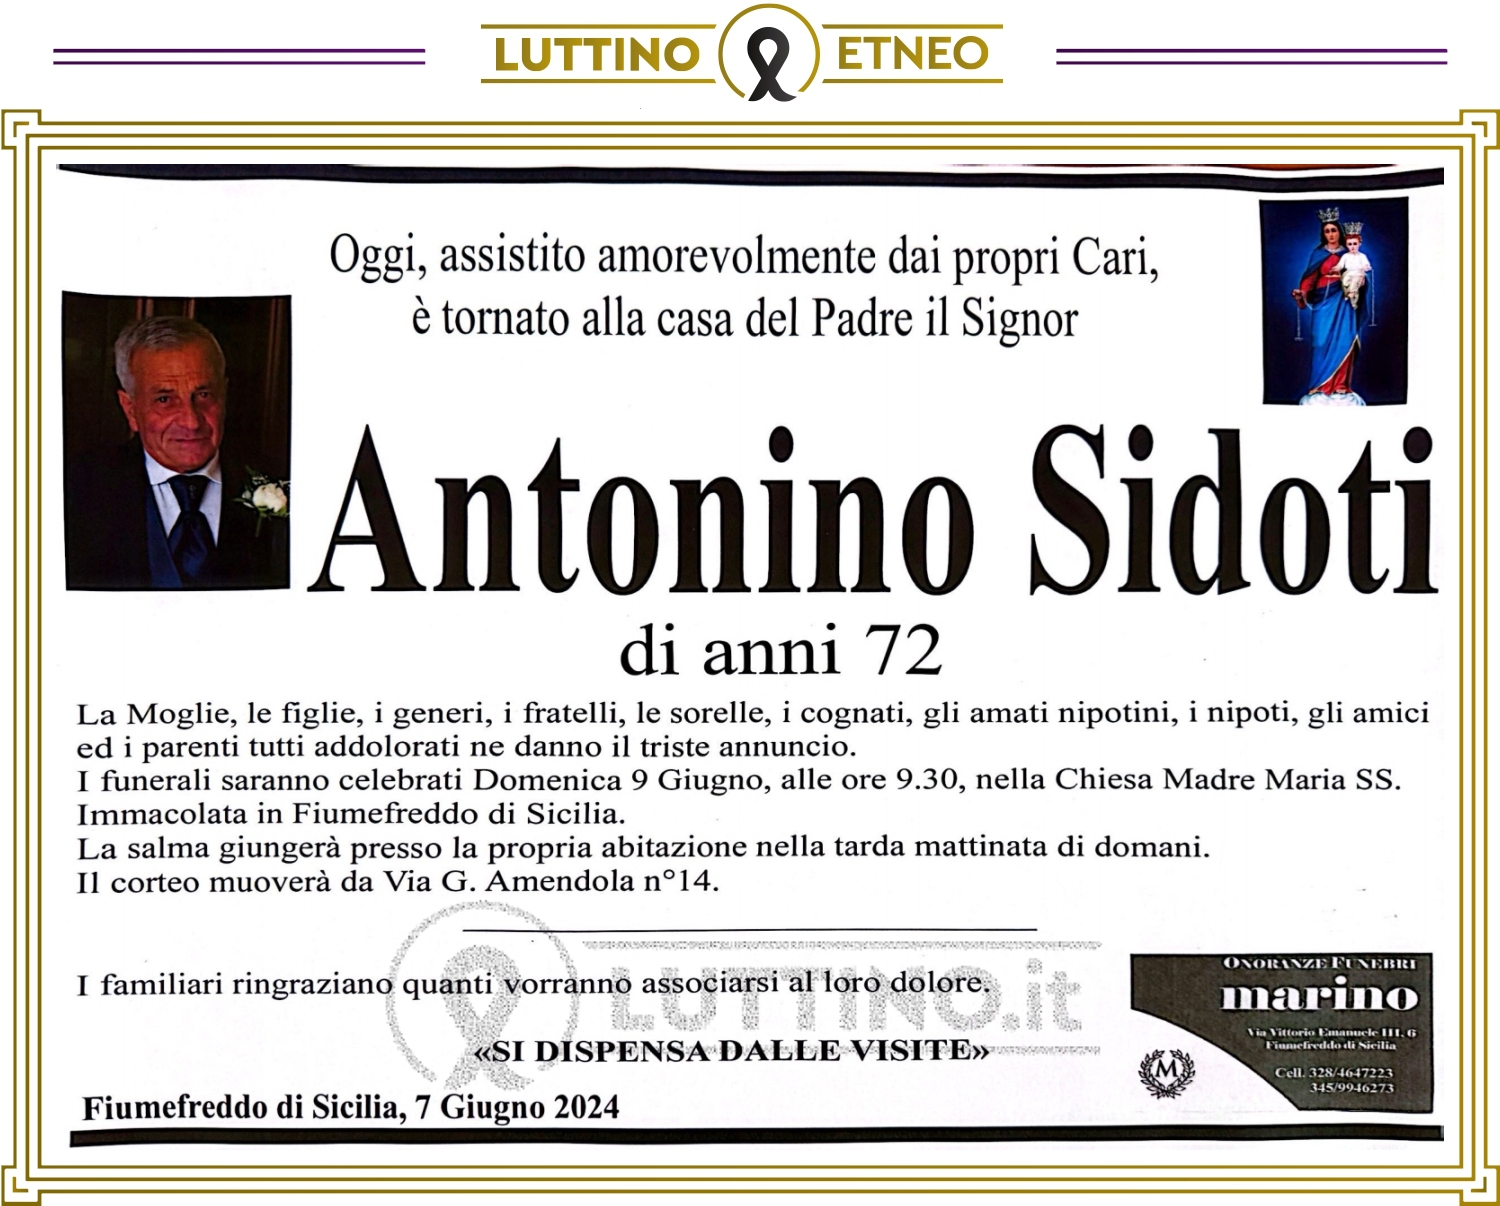 Antonino Sidoti